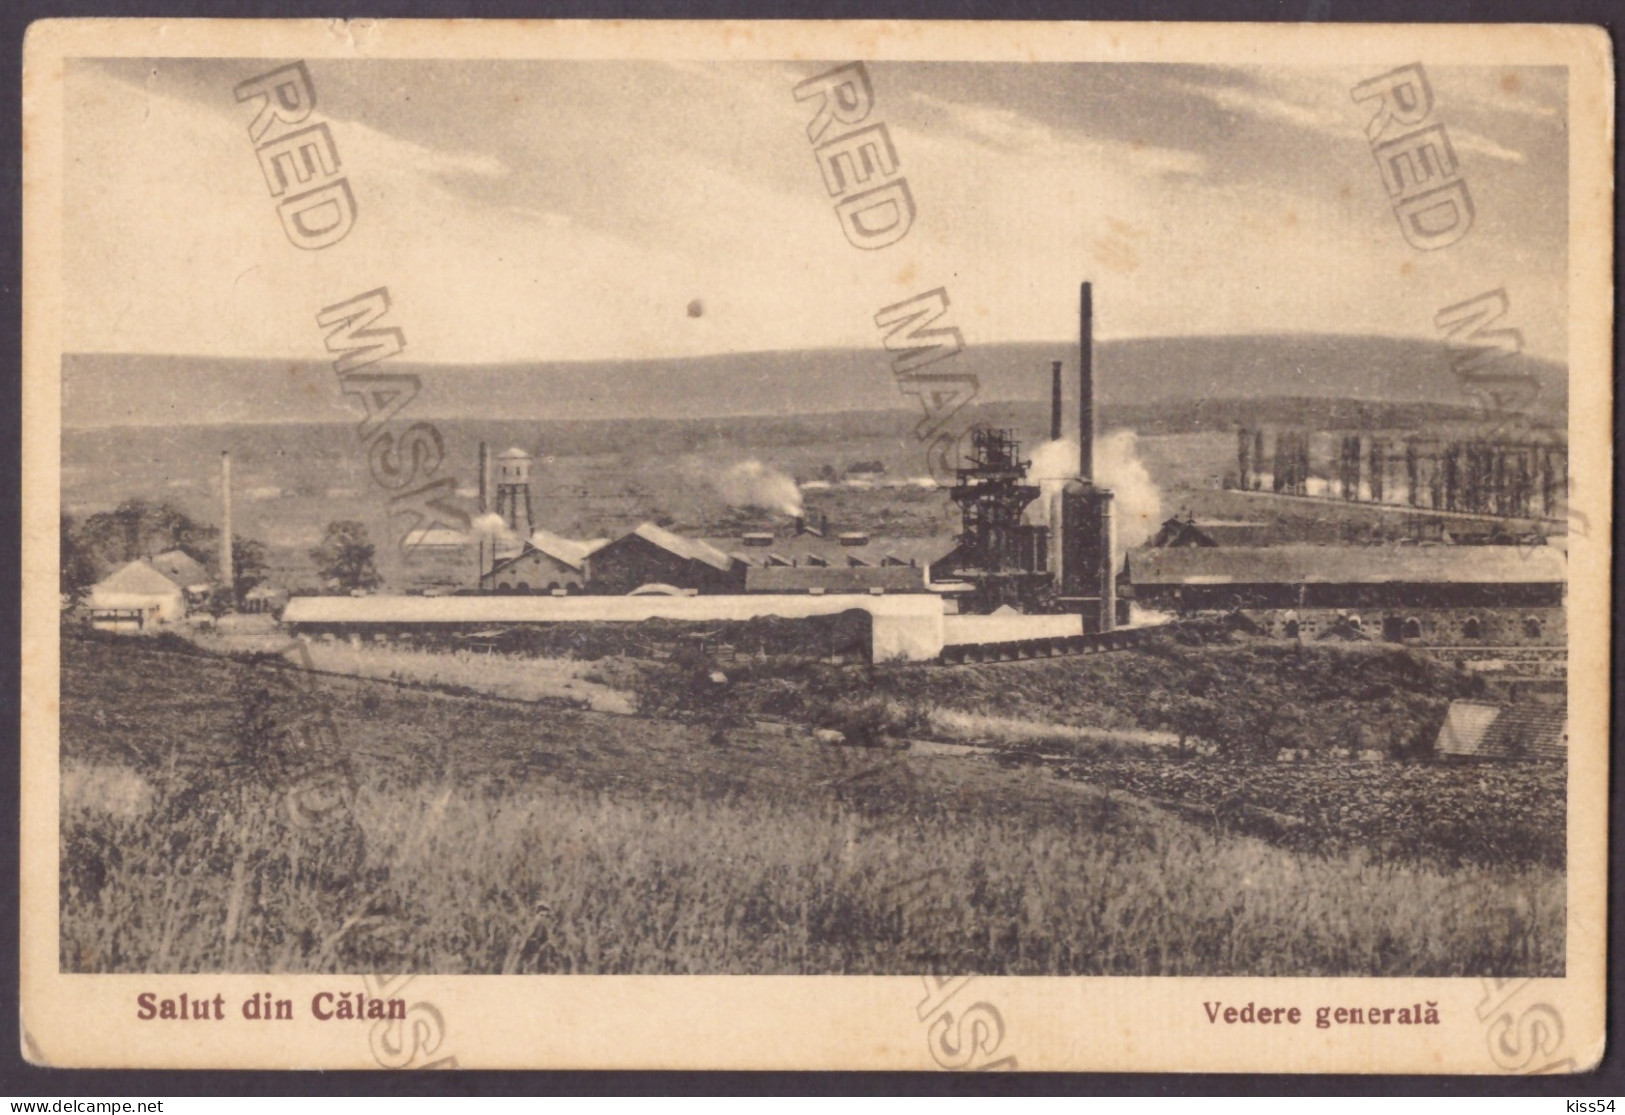 RO 40 - 25014 CALAN, Hunedoara, Panorama, Romania - Old Postcard - Unused - Rumänien